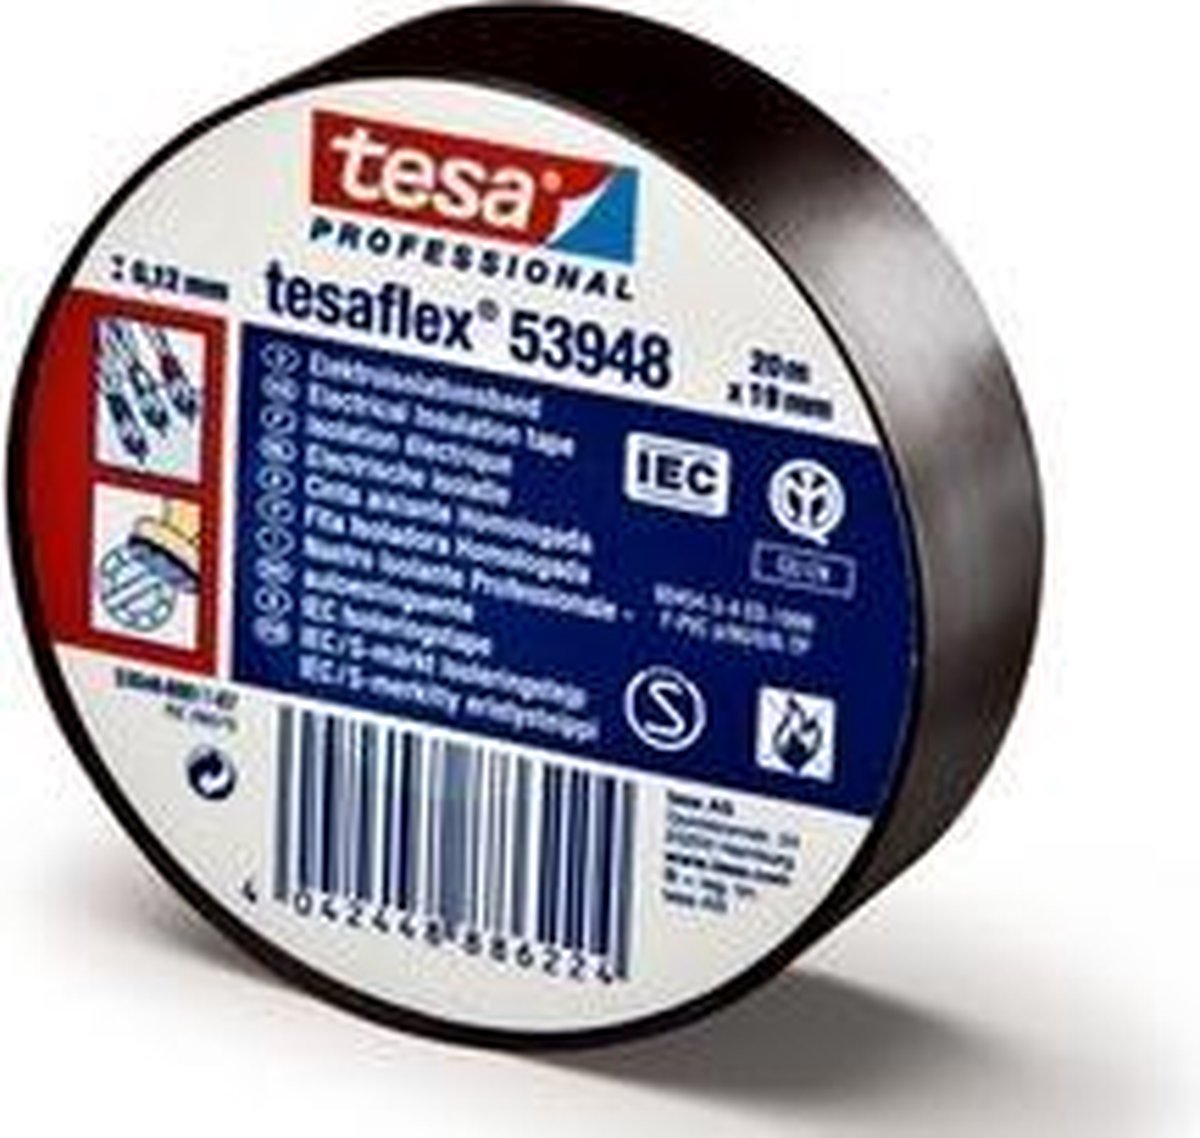 19 mm x 20 m Tesa Électrique PVC ISOLATION RUBAN câble noir tesaflex ® 53948